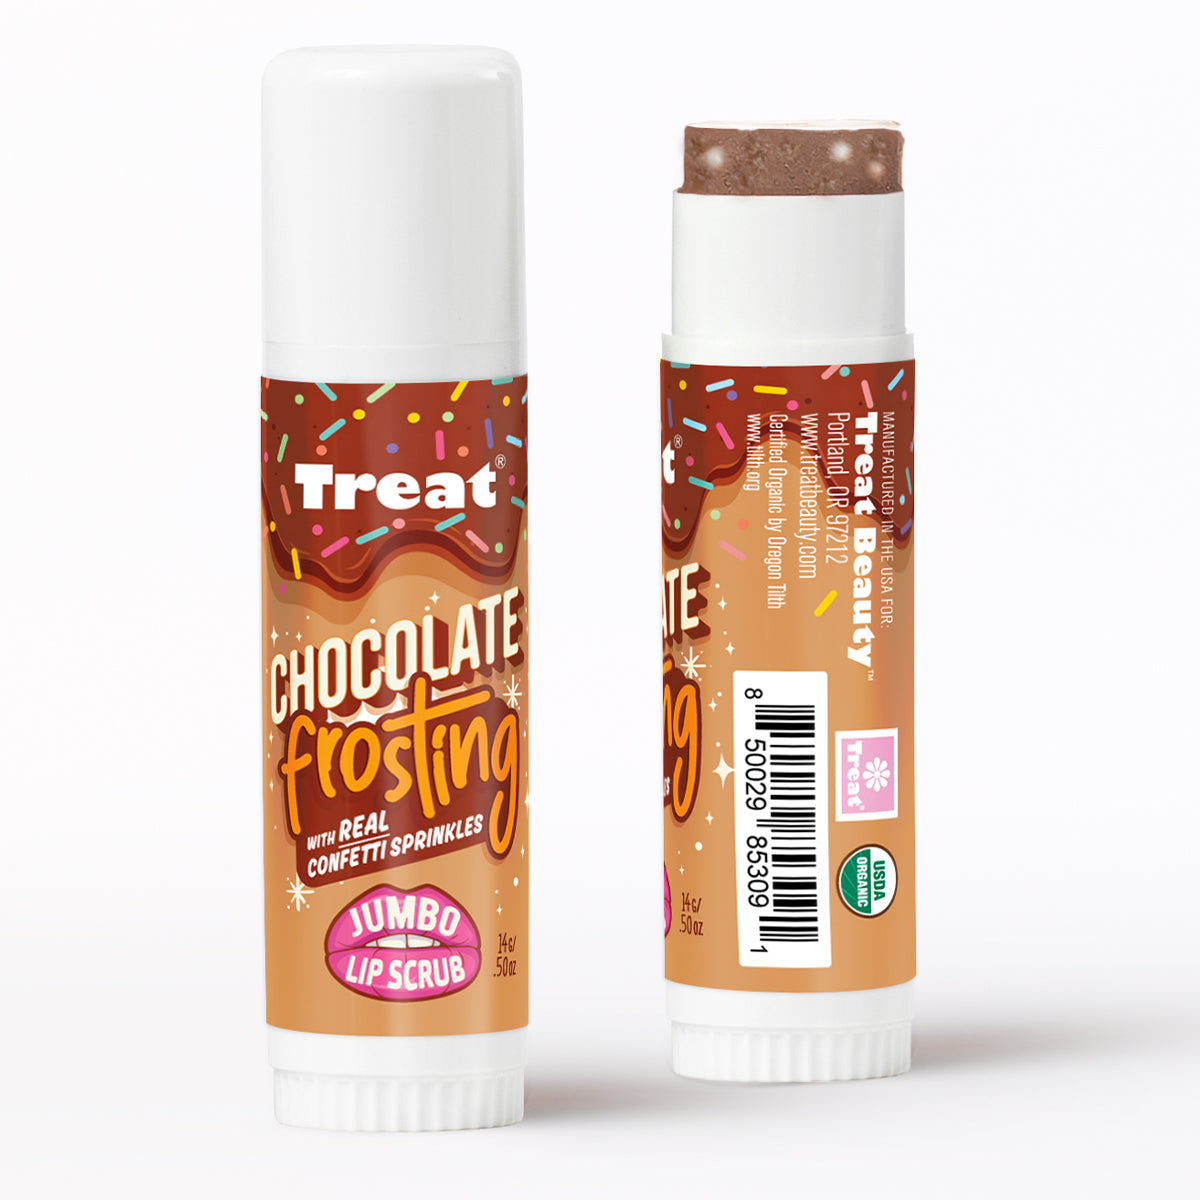 Chocolate Frosting Organic Lip Scrub